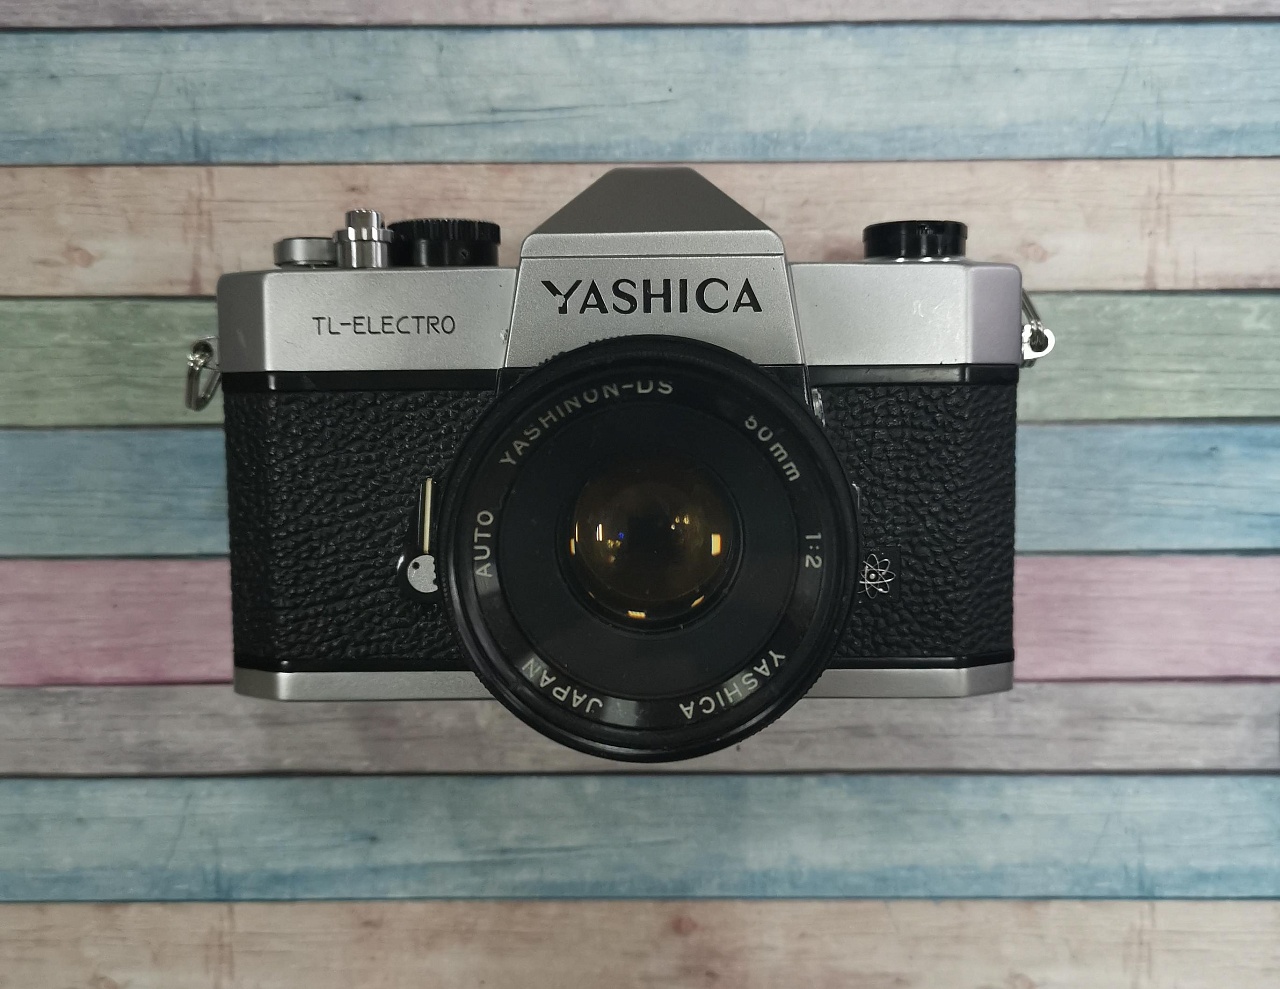 Yashica tl-electro + Auto yashinon-ds 50 mm f/2.0 фото №1